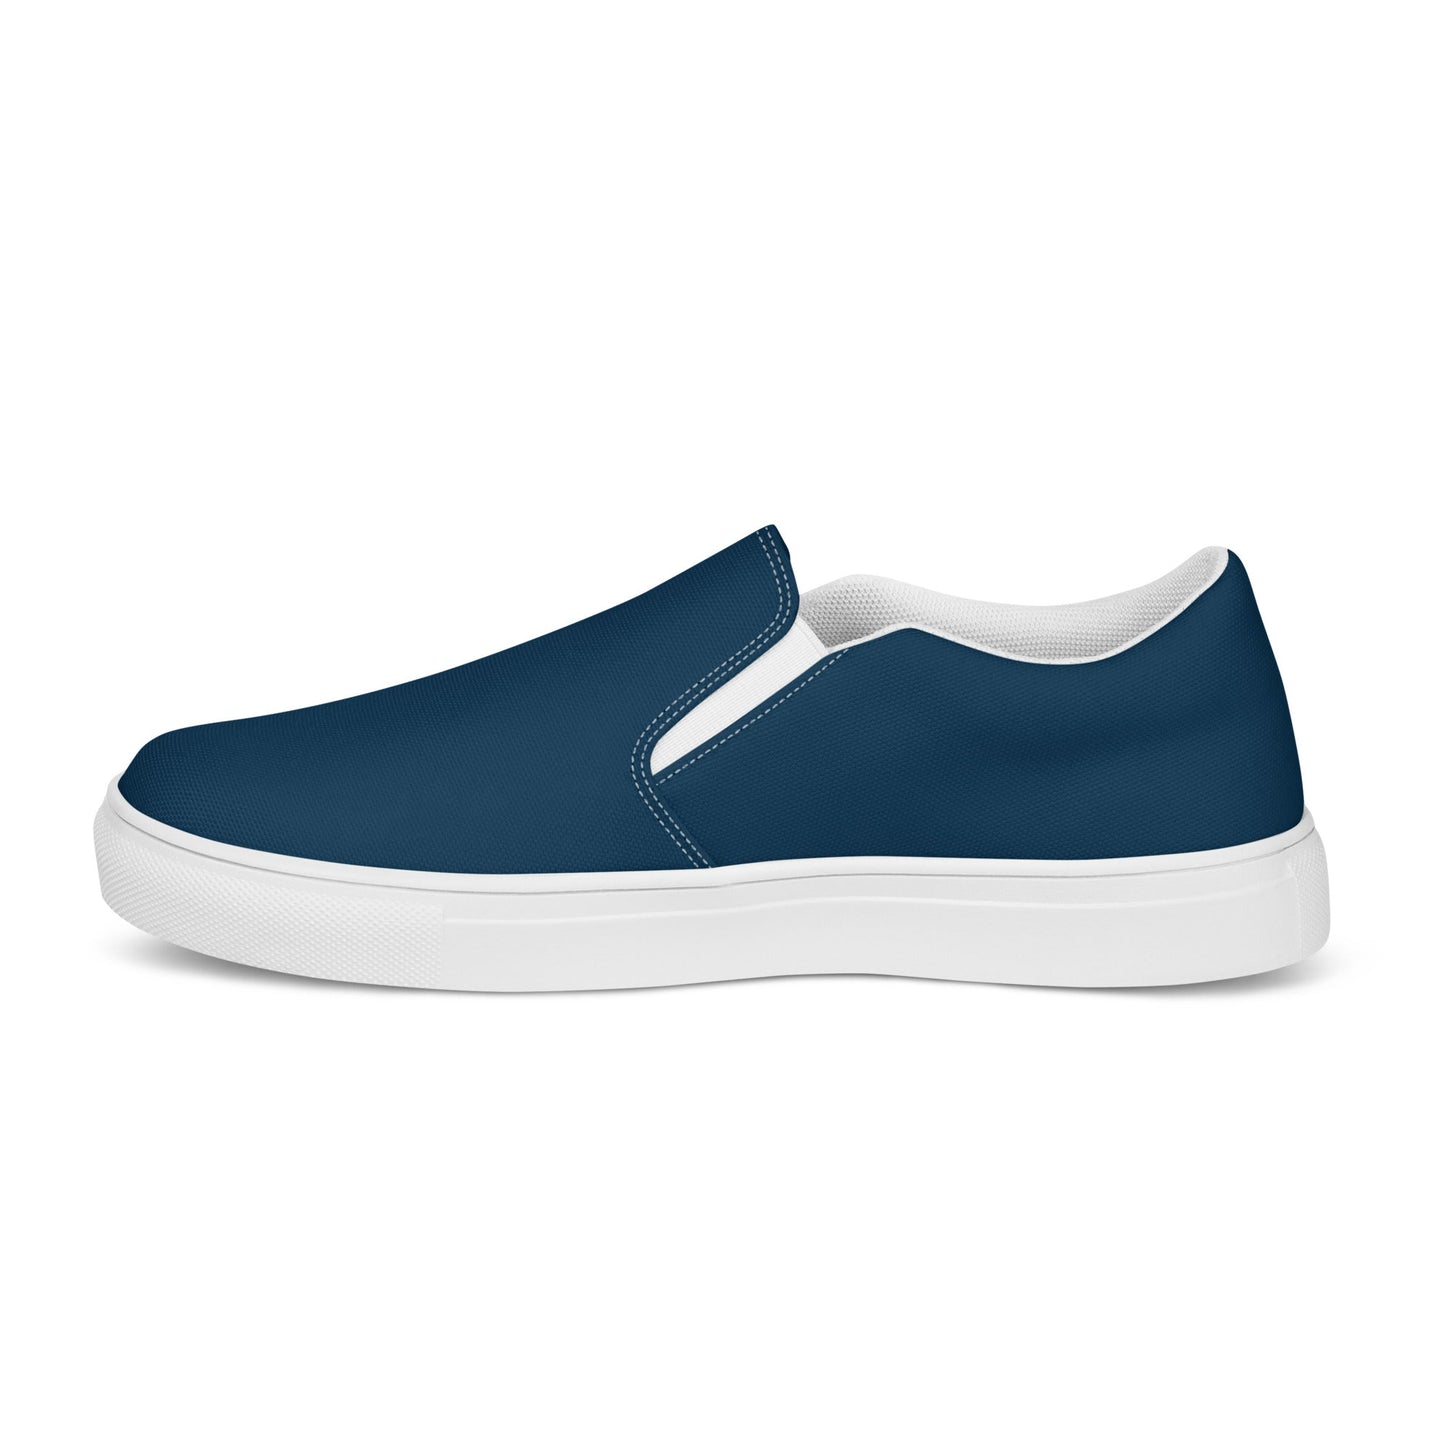 klasneakers Men’s slip-on canvas shoes - Ink Blue